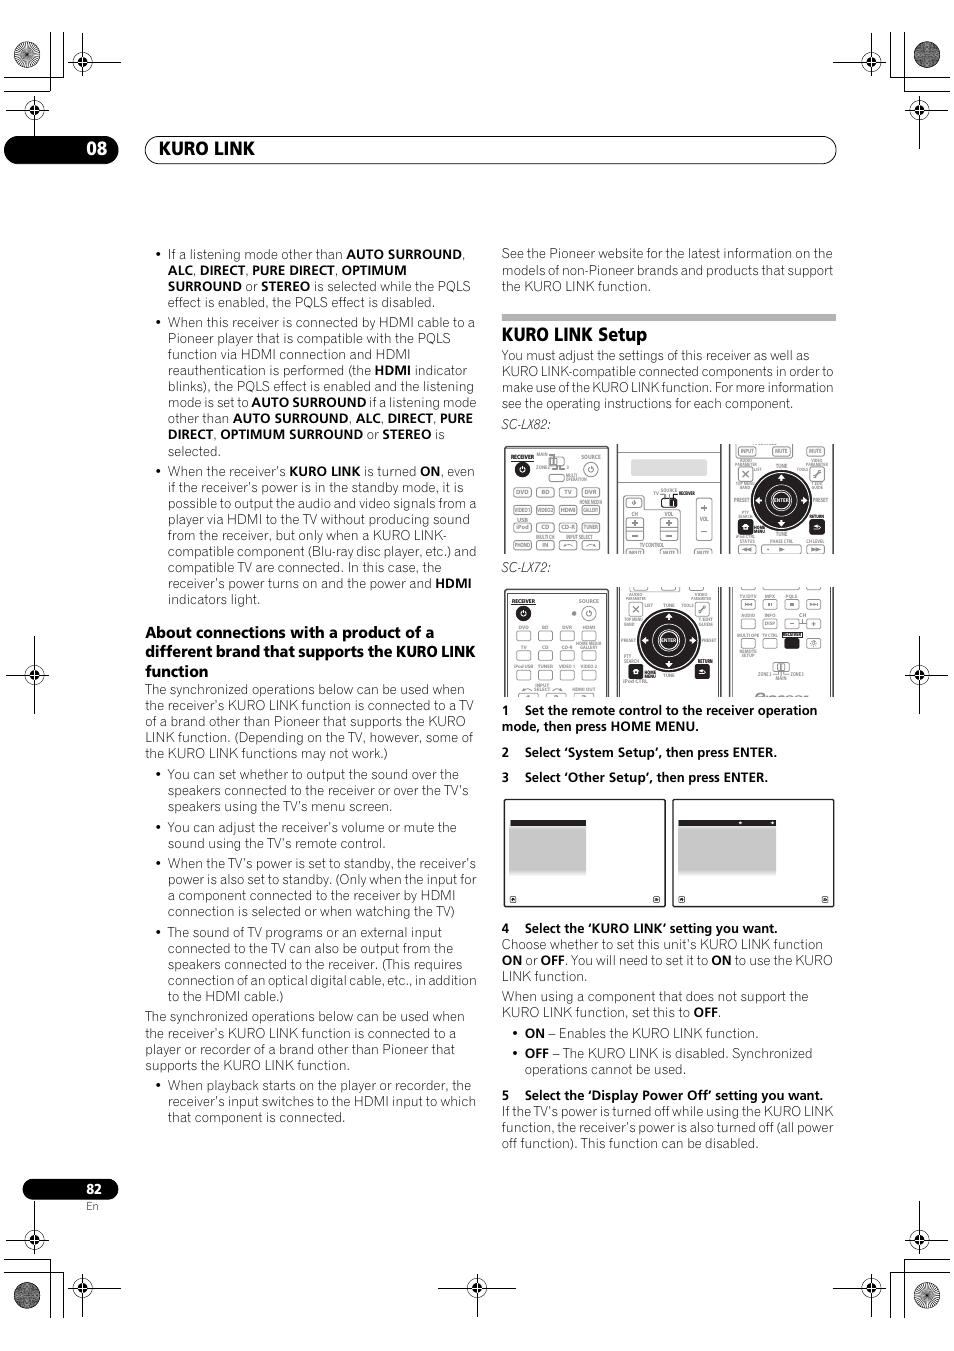 Kuro link setup, Kuro link 08, Sc-lx72 | Pioneer SC-LX82 User Manual